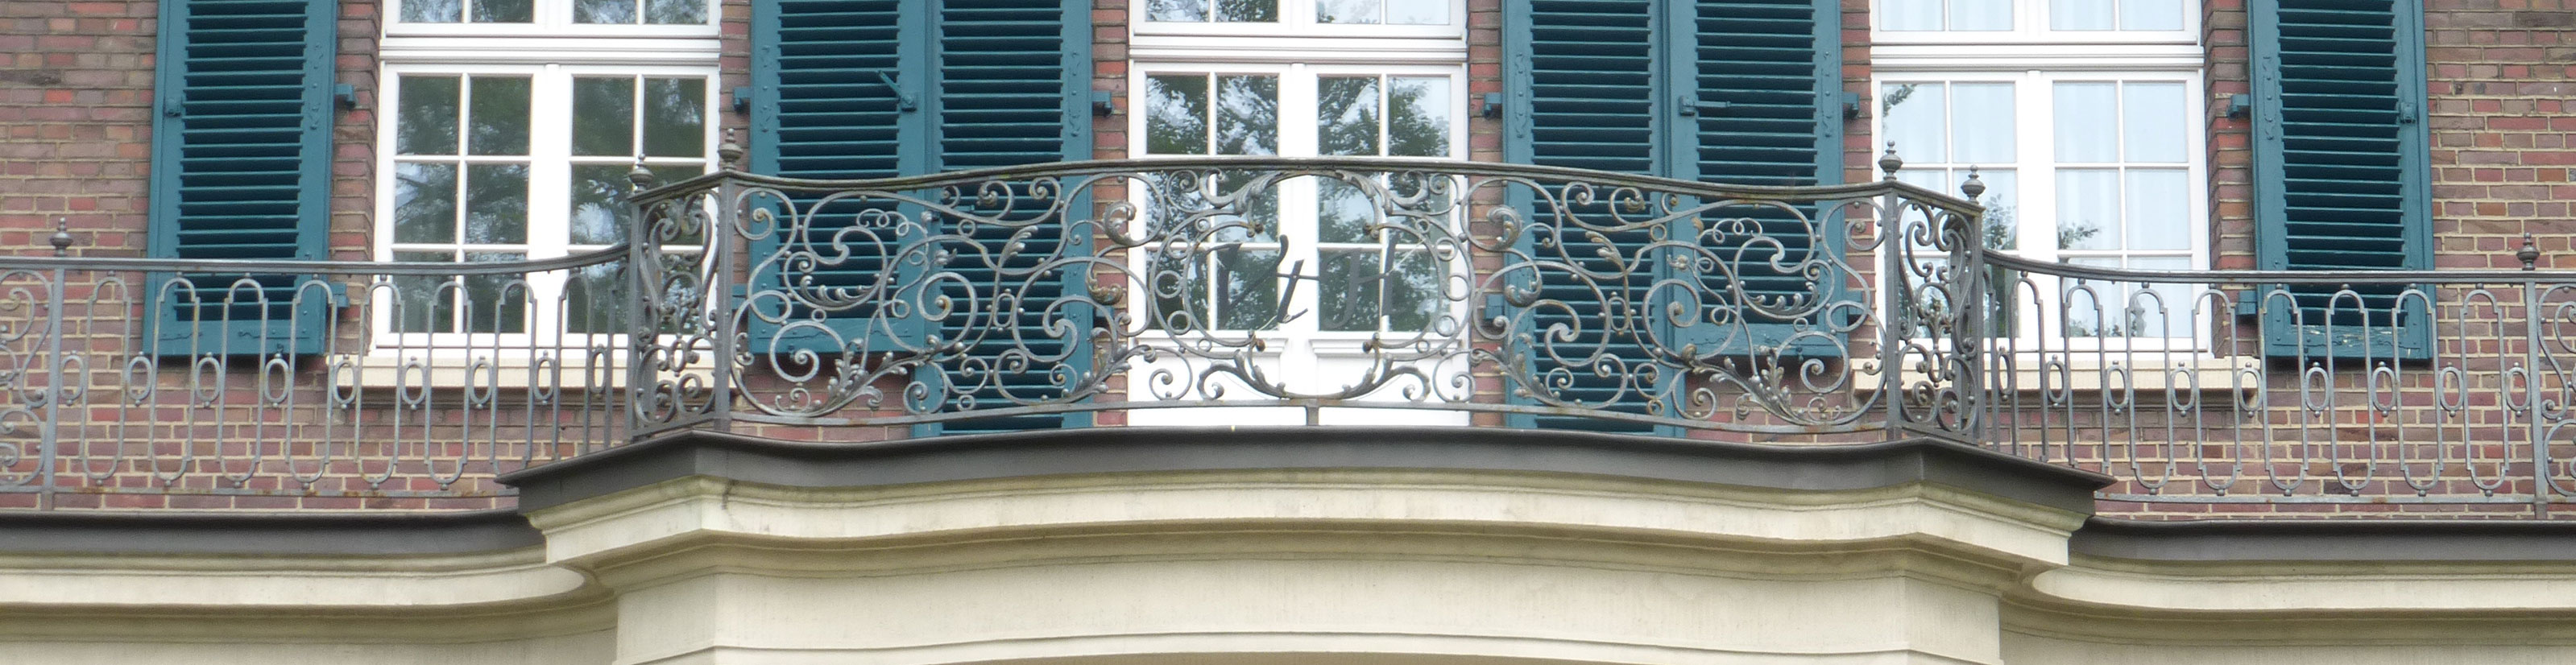 Das schmiedeeiserne Gitter des Balkon mit den Initialen des Bauherrn Robert ten Hompel